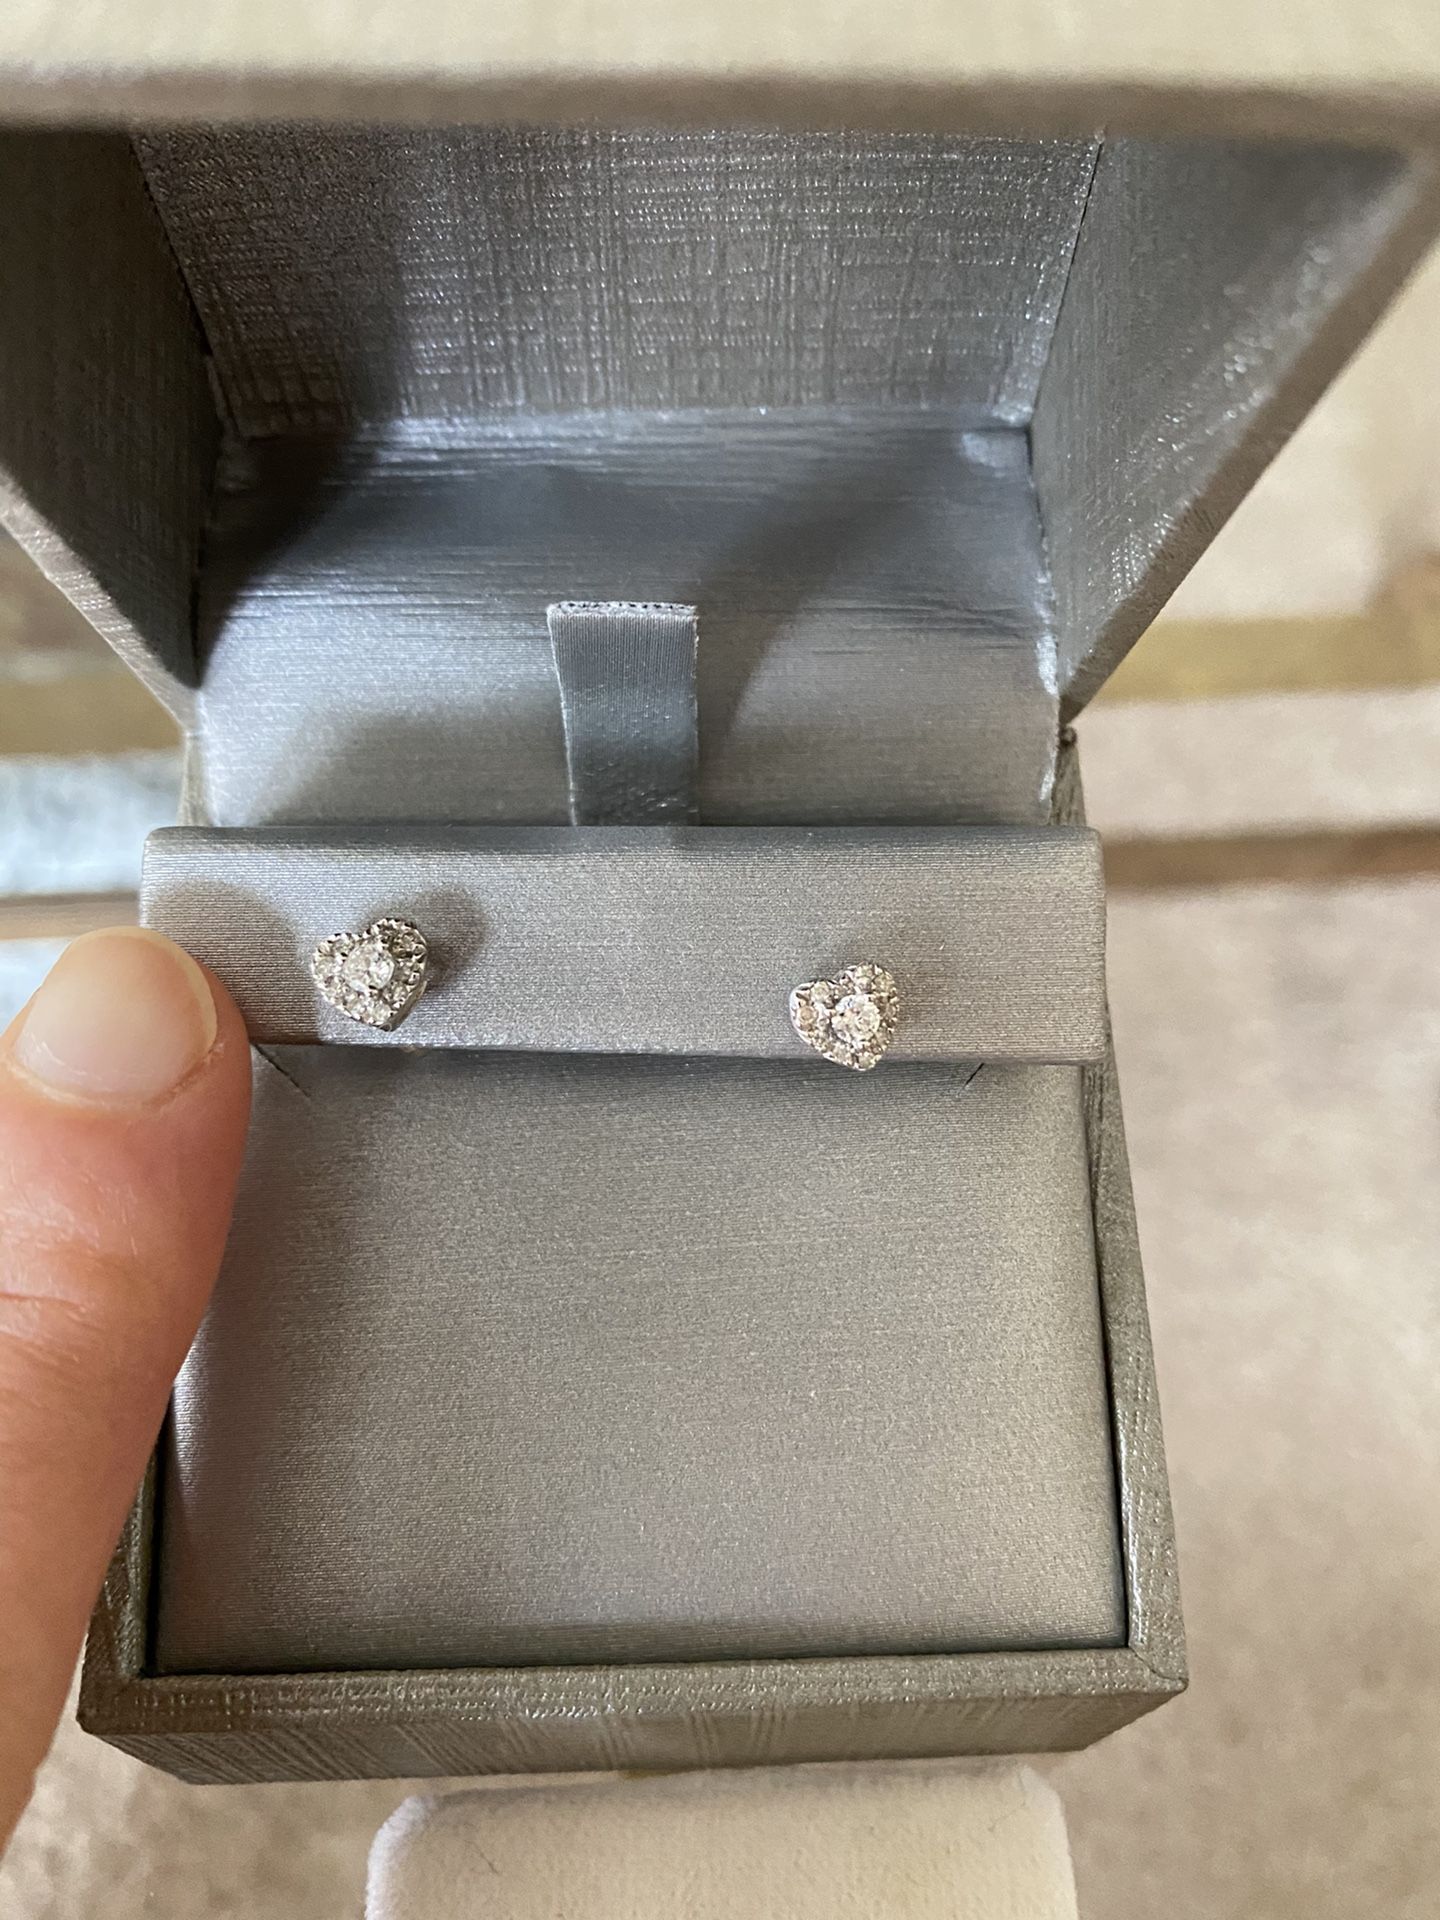 Heart ❤️ shaped diamond earrings